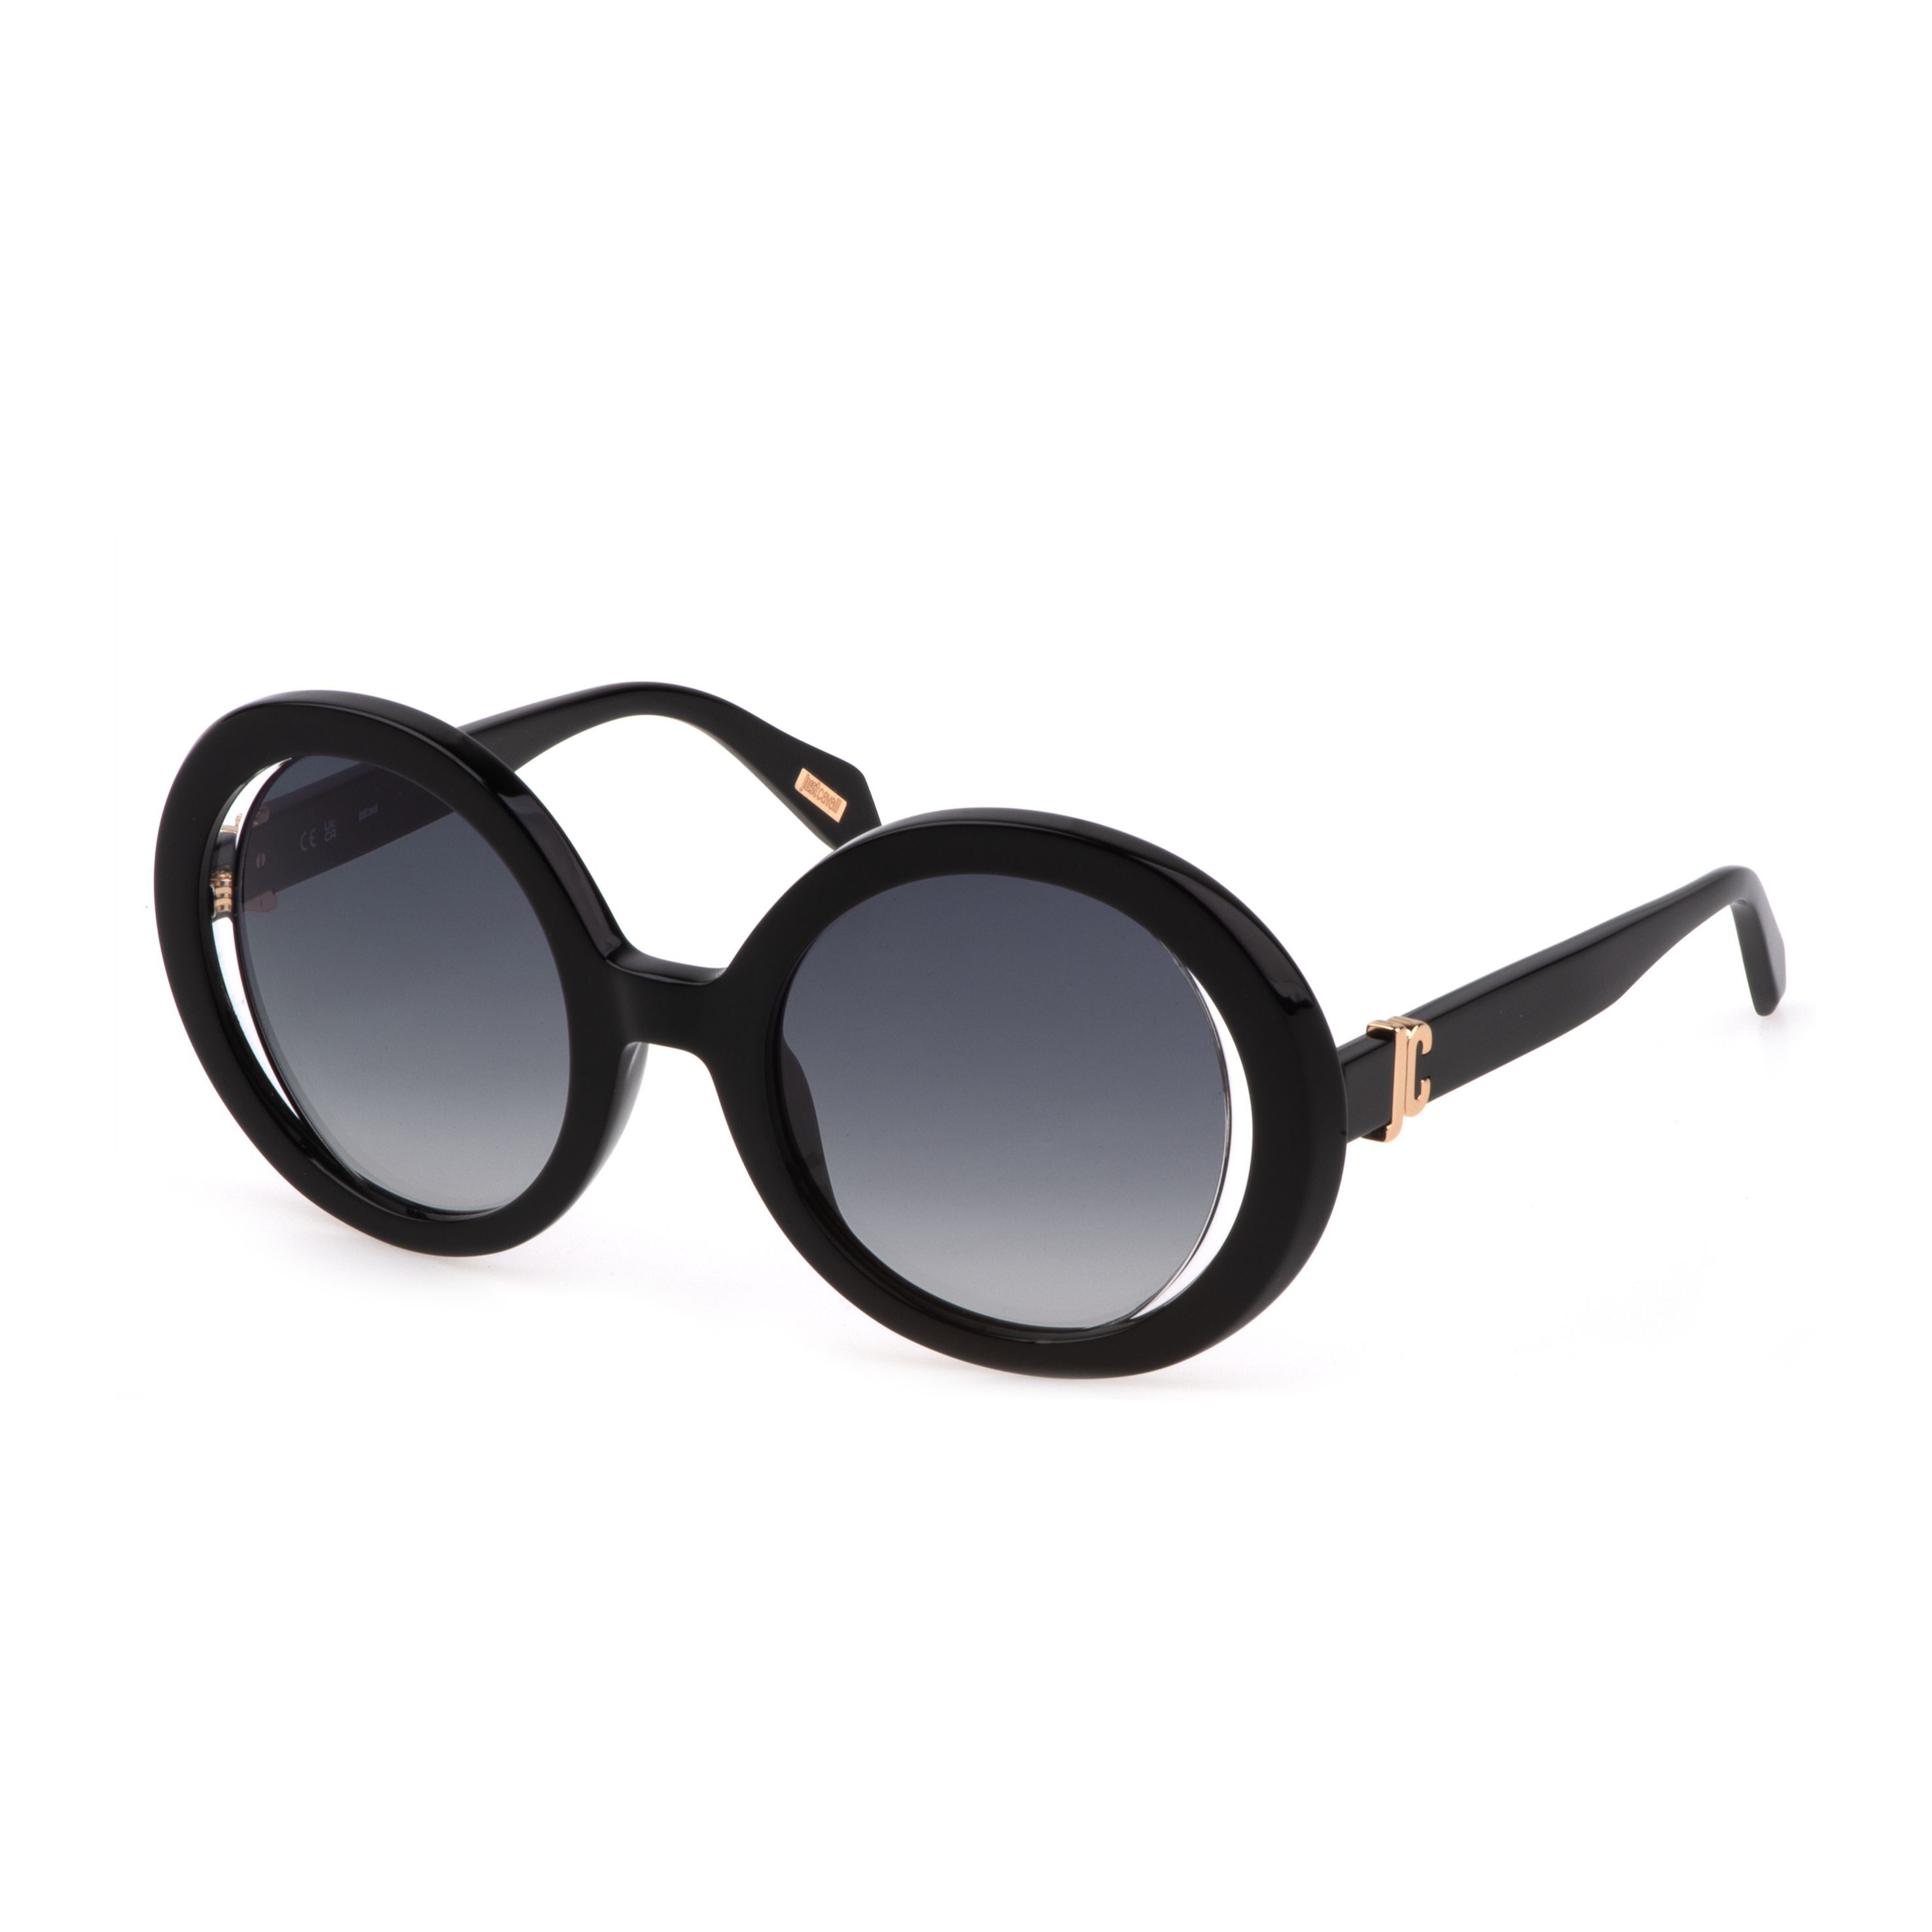 SJC028 Round Sunglasses 700 - size 51